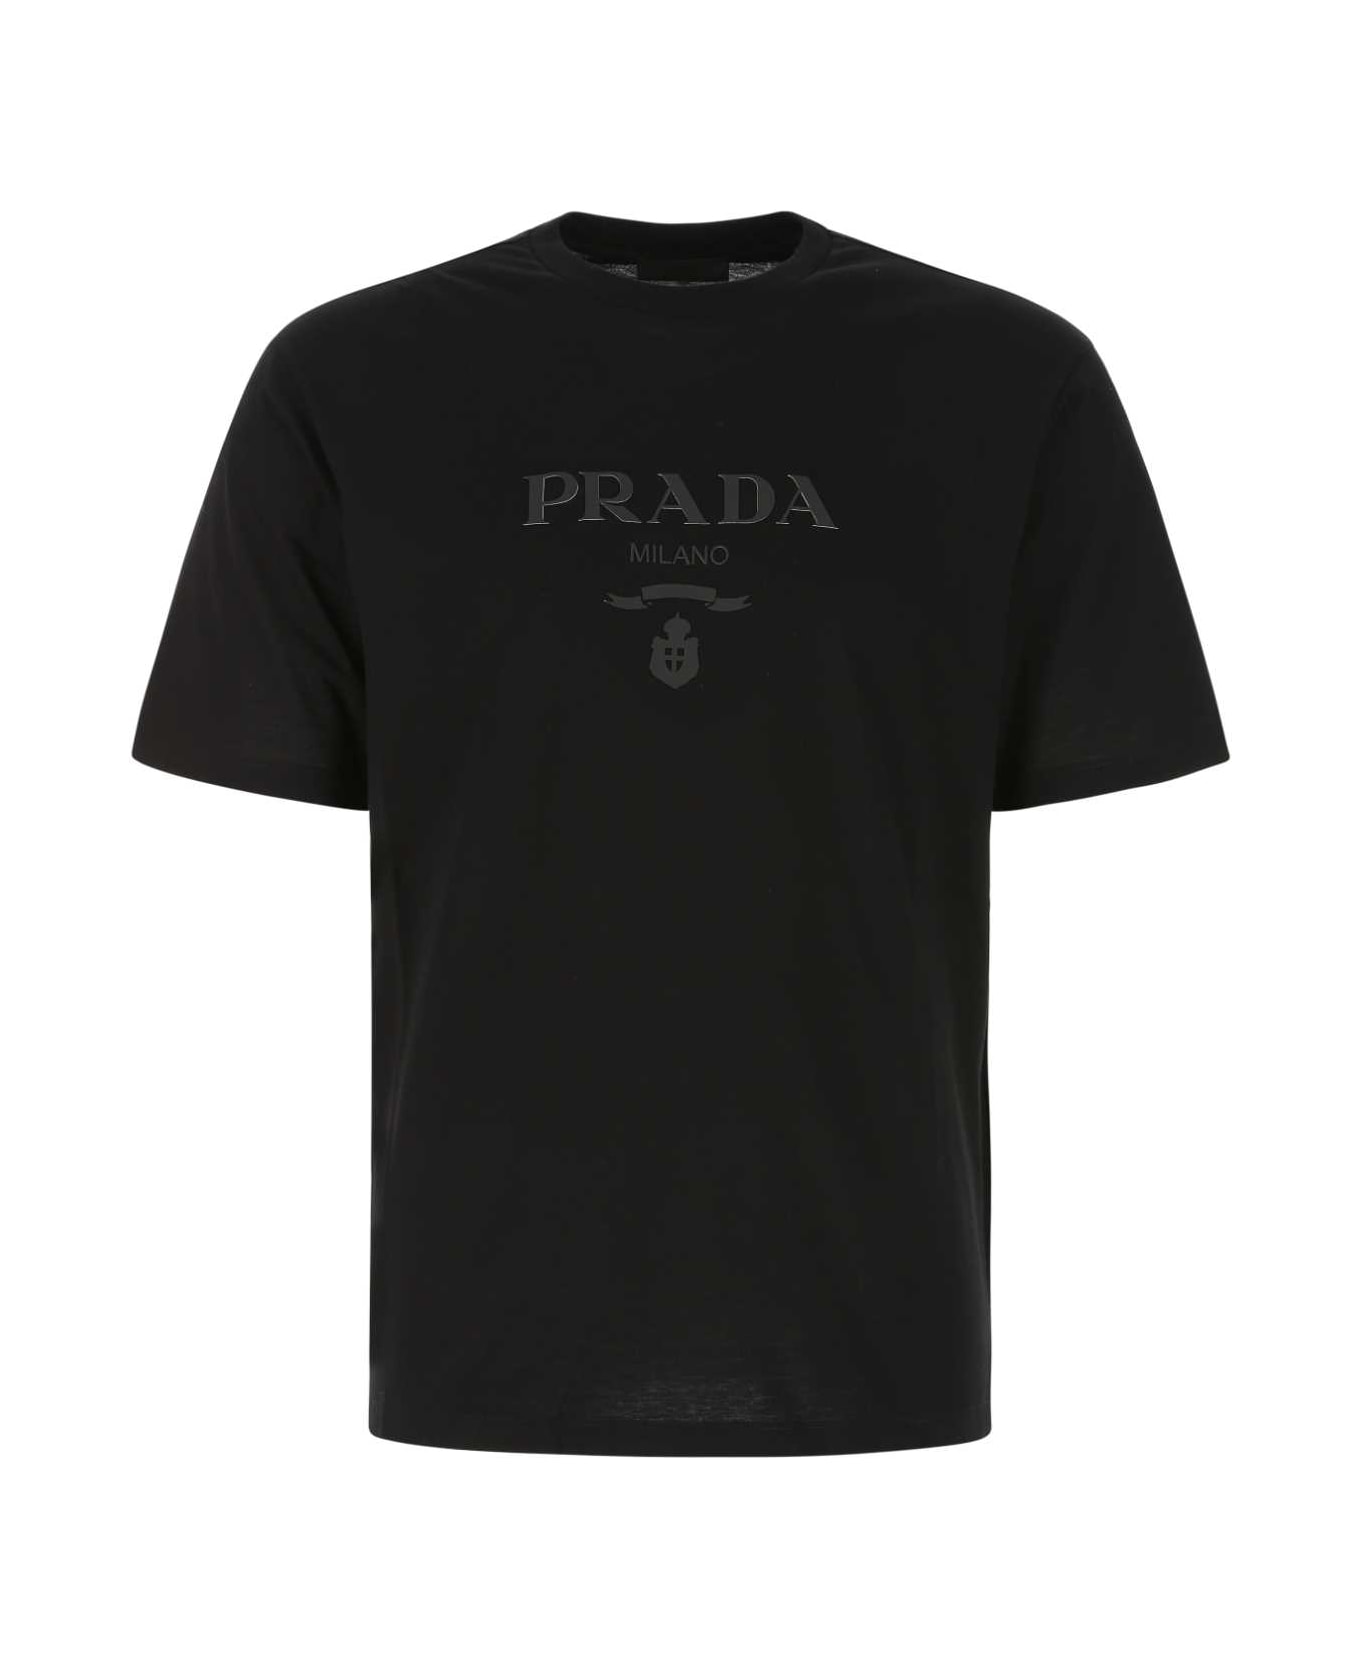 Prada Black Cotton T-shirt - F0002